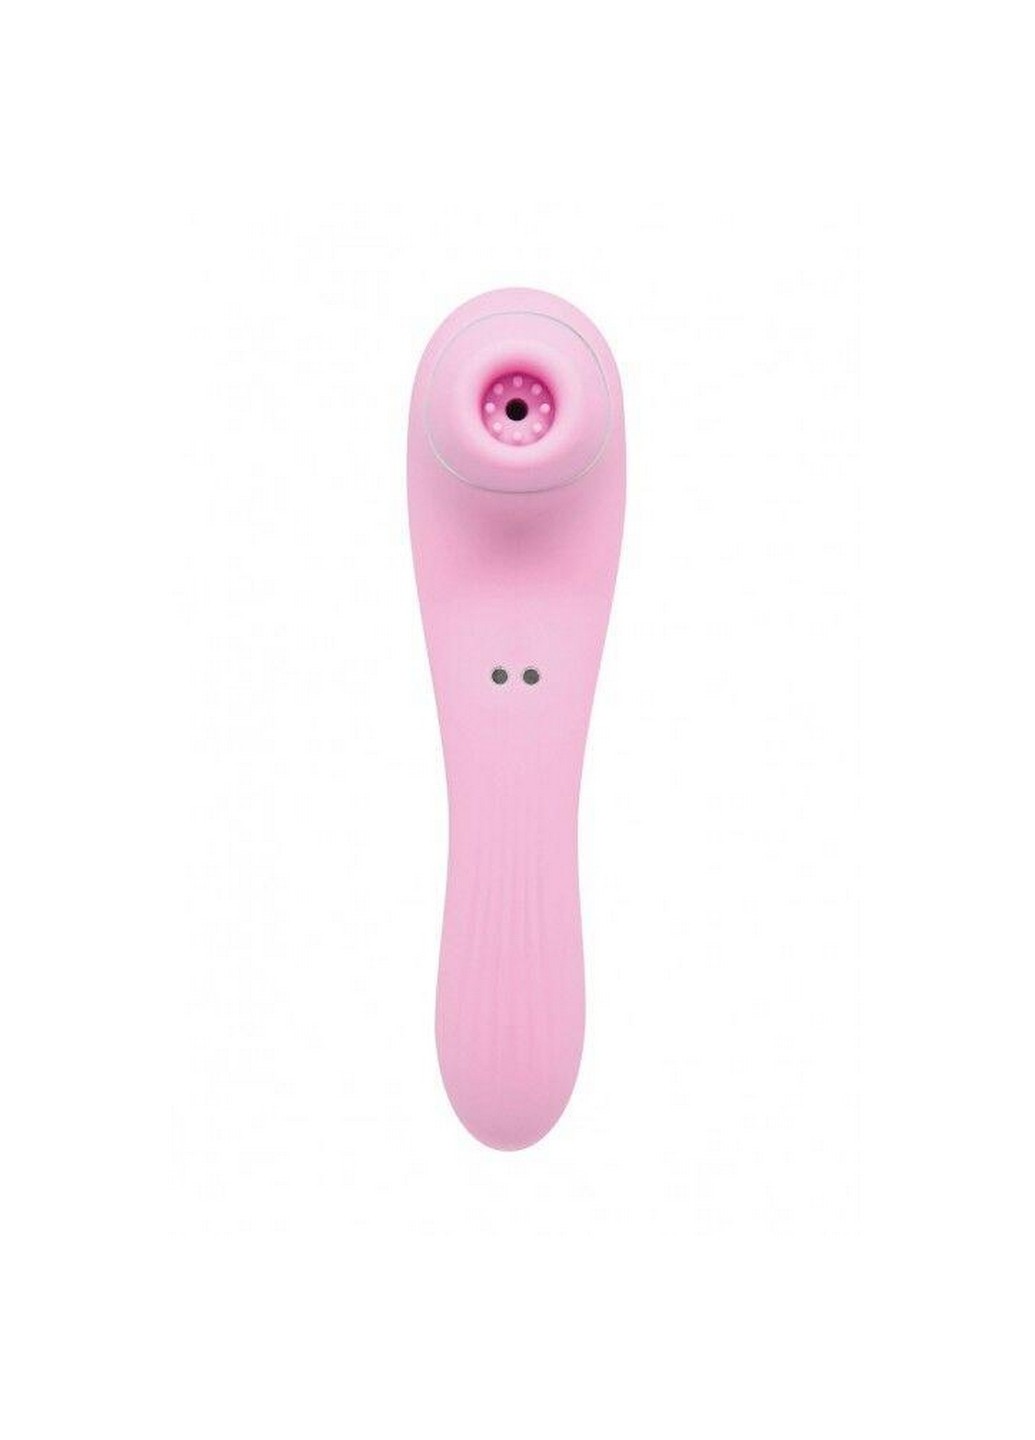 Вакуумний стимулятор з вібрацією Smoooch Pink Clitoral Suction & Vibration No Brand (260413902)